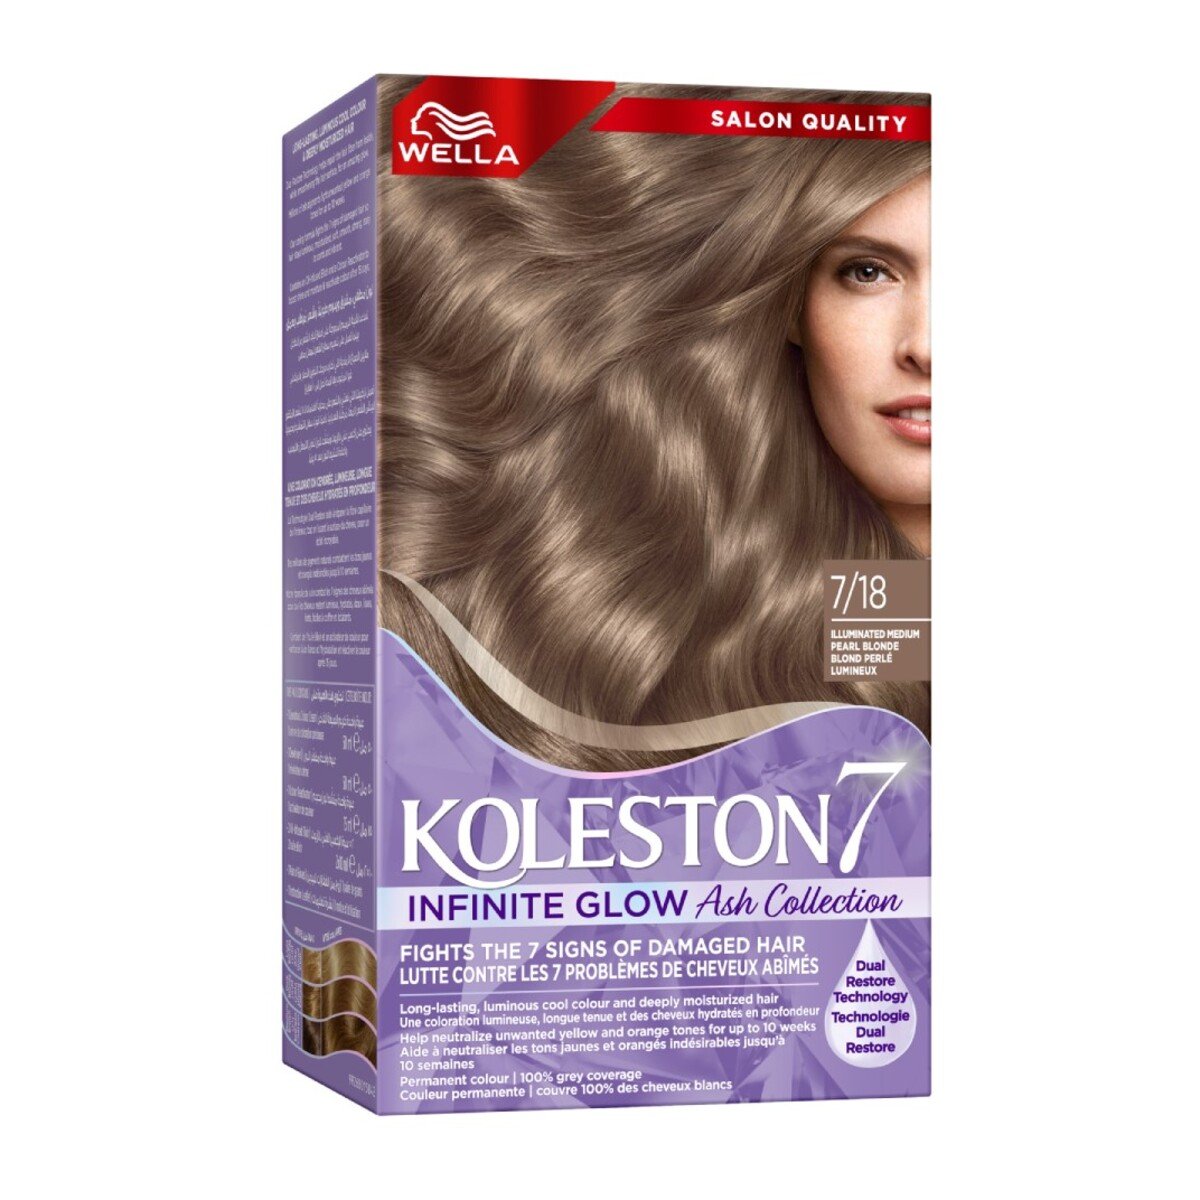 Koleston Infinite Glow Illuminated Medium Pearl Blonde Hair Cream Color 7/18 1 pkt